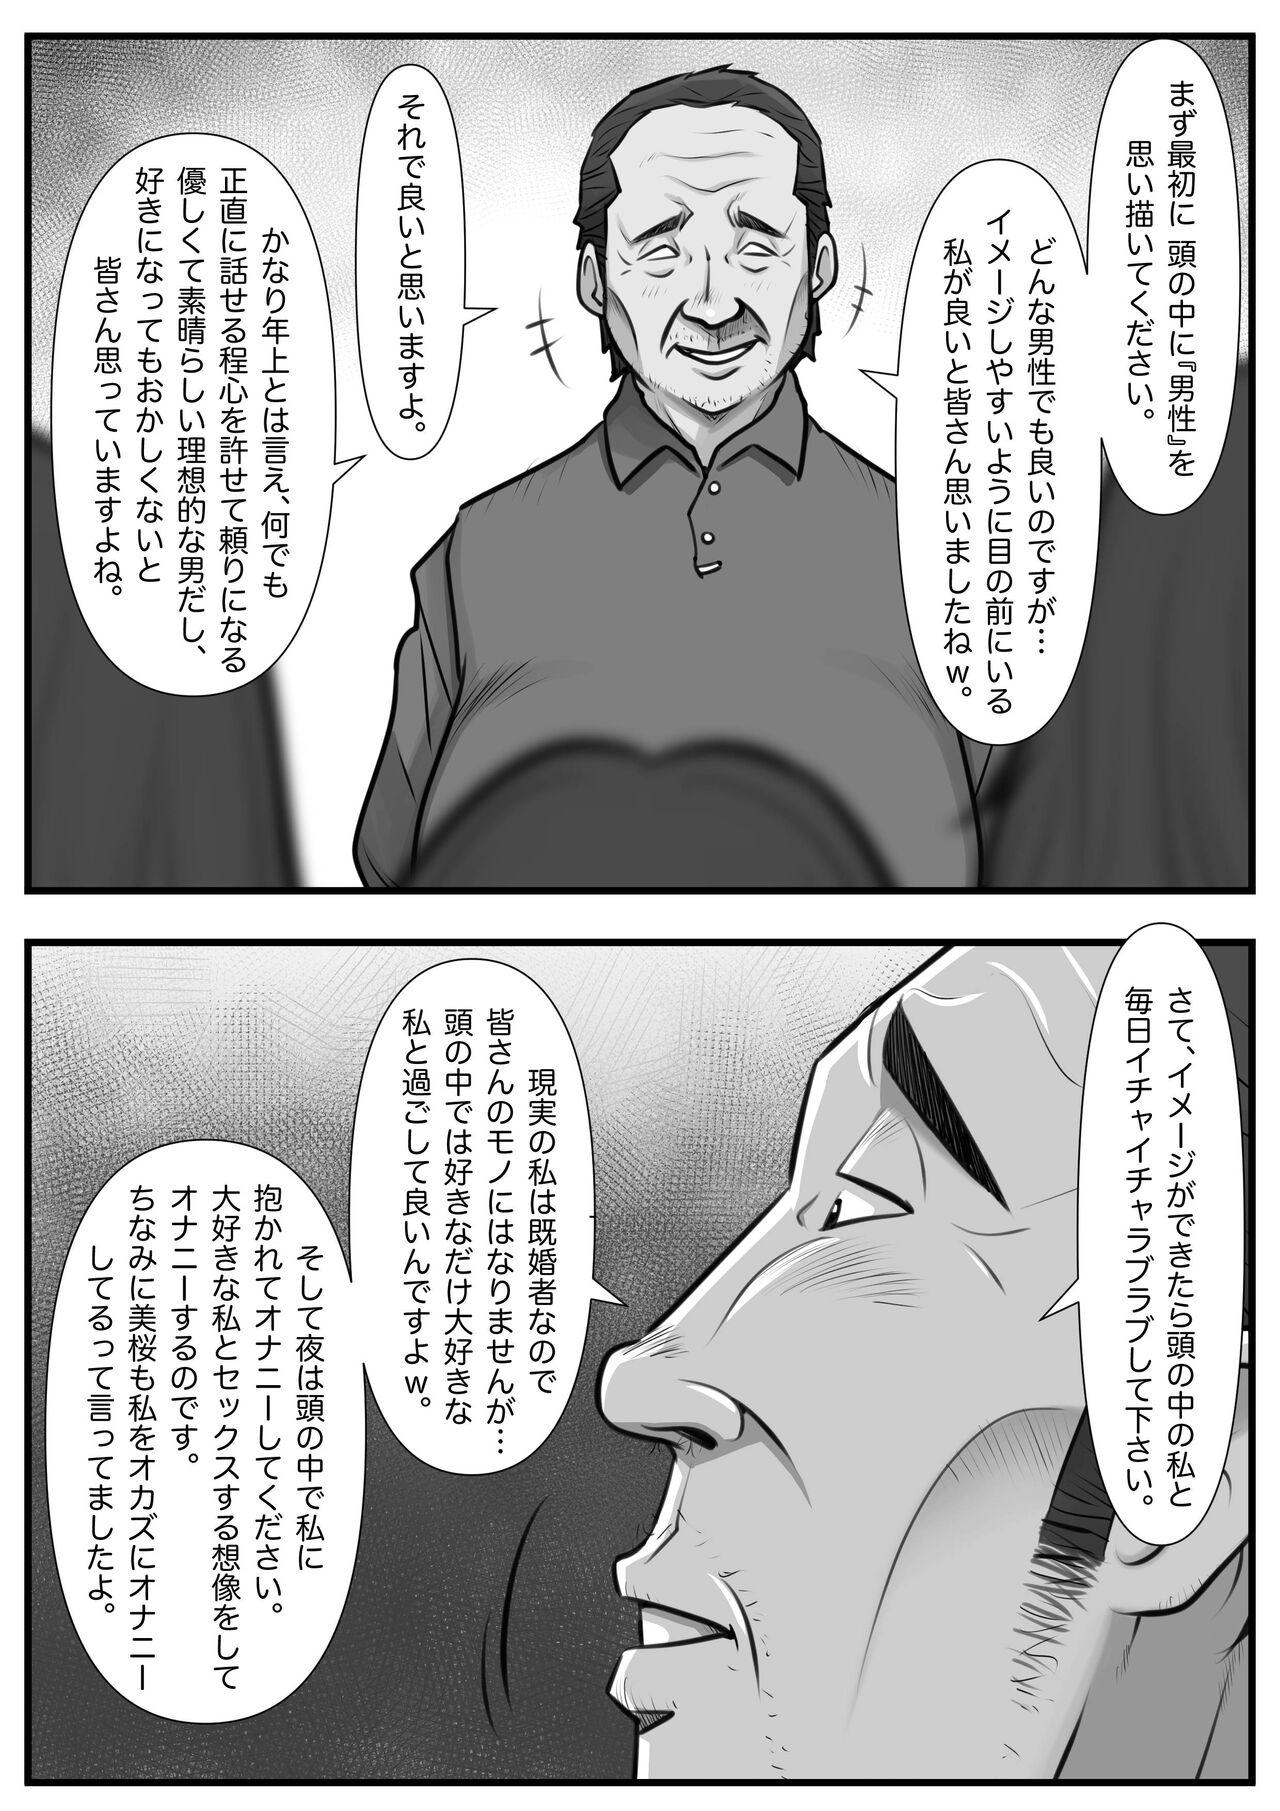 Mahōtsukai no Ossan 13 18